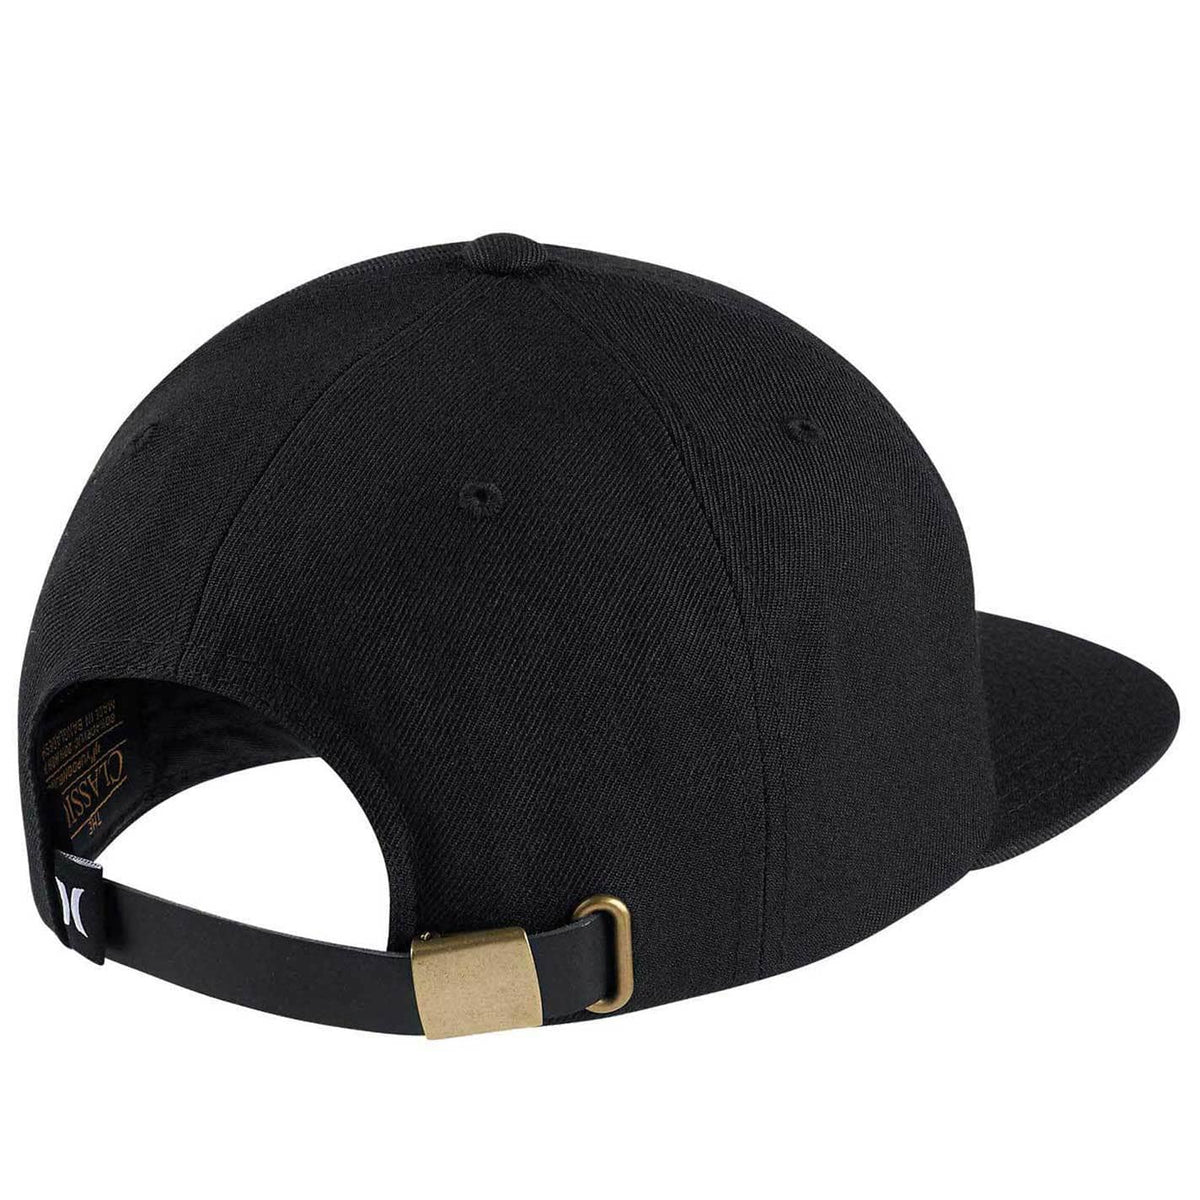 Hurley Mahalo Kooks Hat Black O/S (one size) Strapback Cap by Hurley